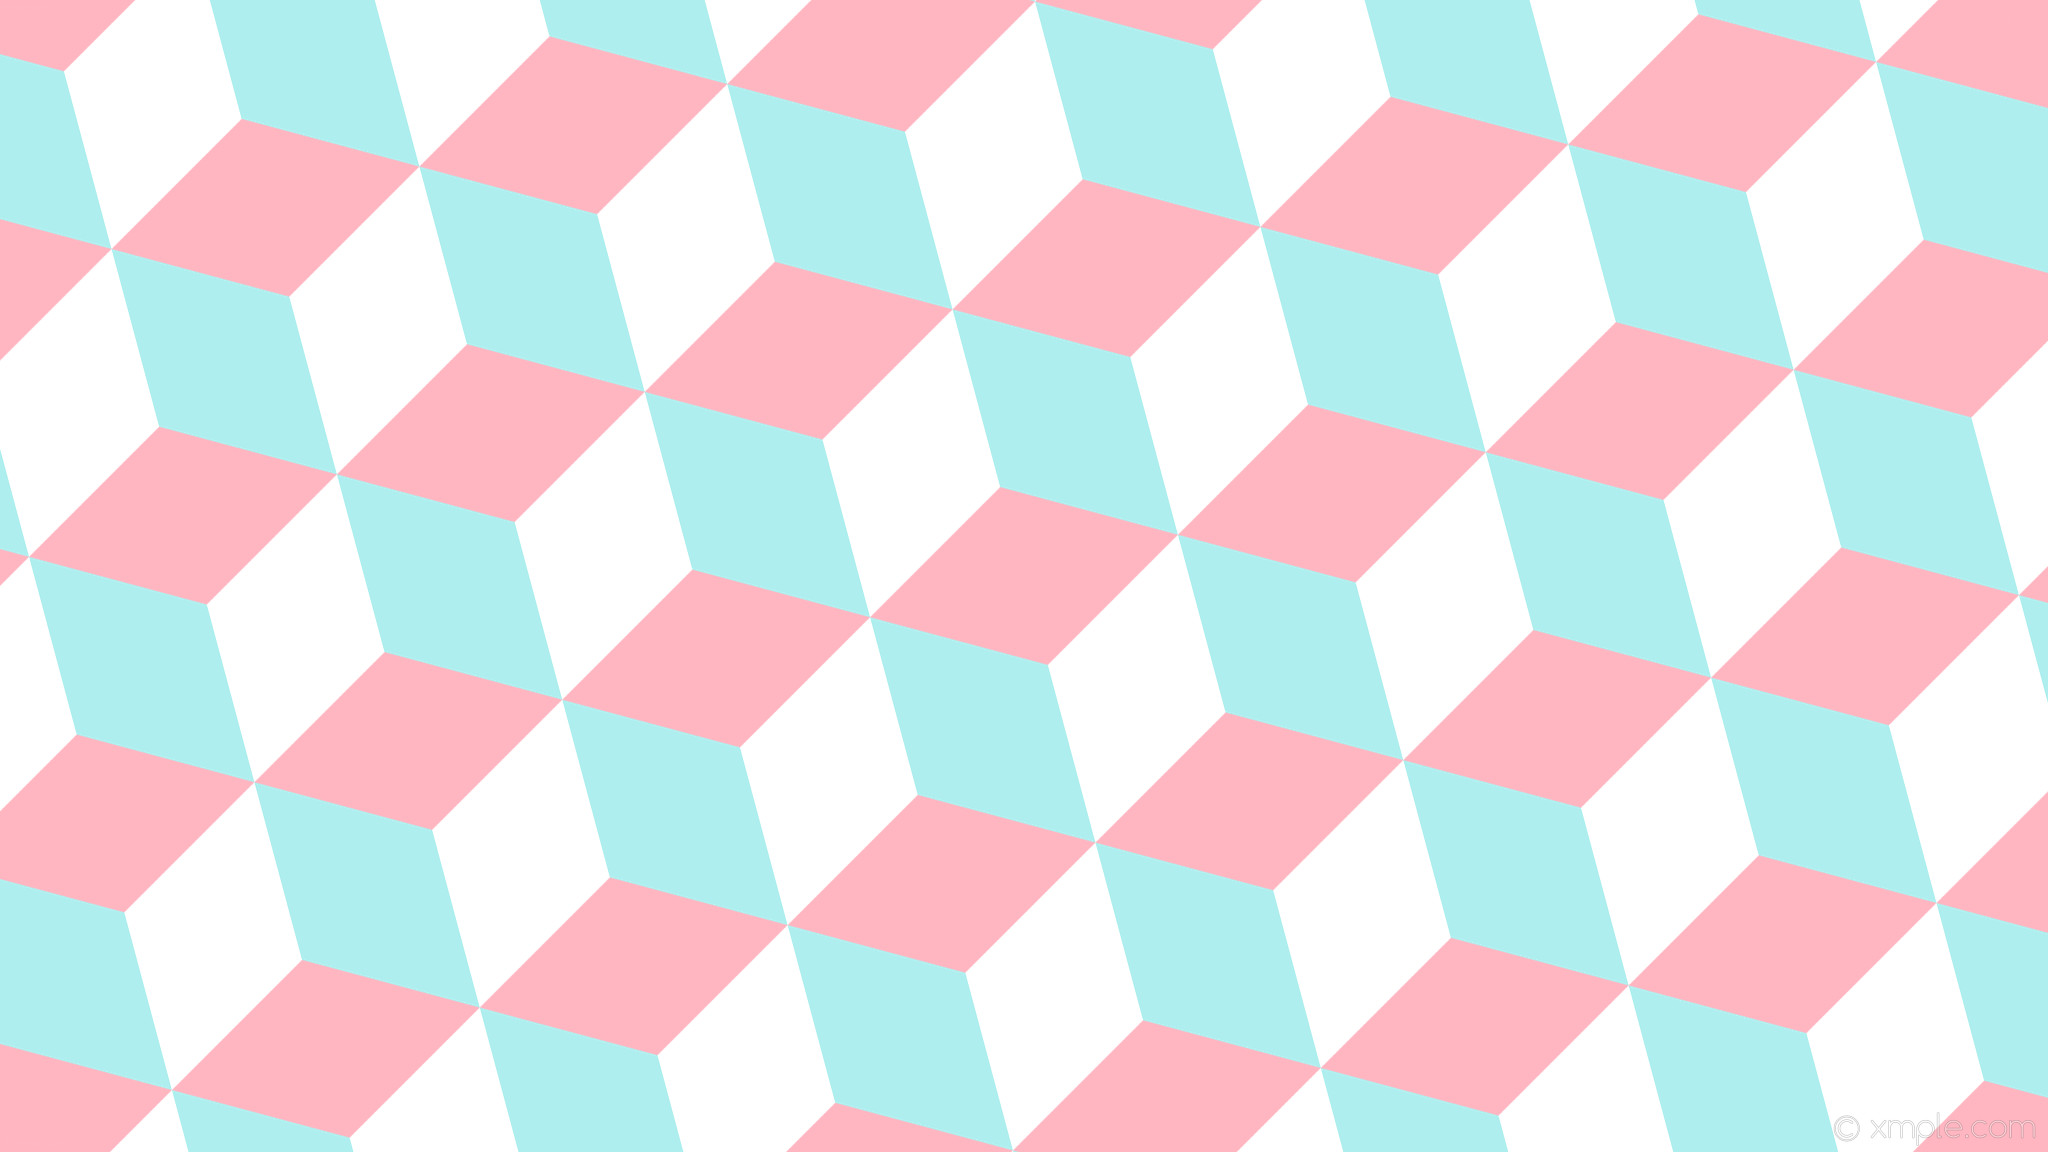 2048x1152 wallpaper blue white 3d cubes pink light pink pale turquoise #ffb6c1  #afeeee #ffffff